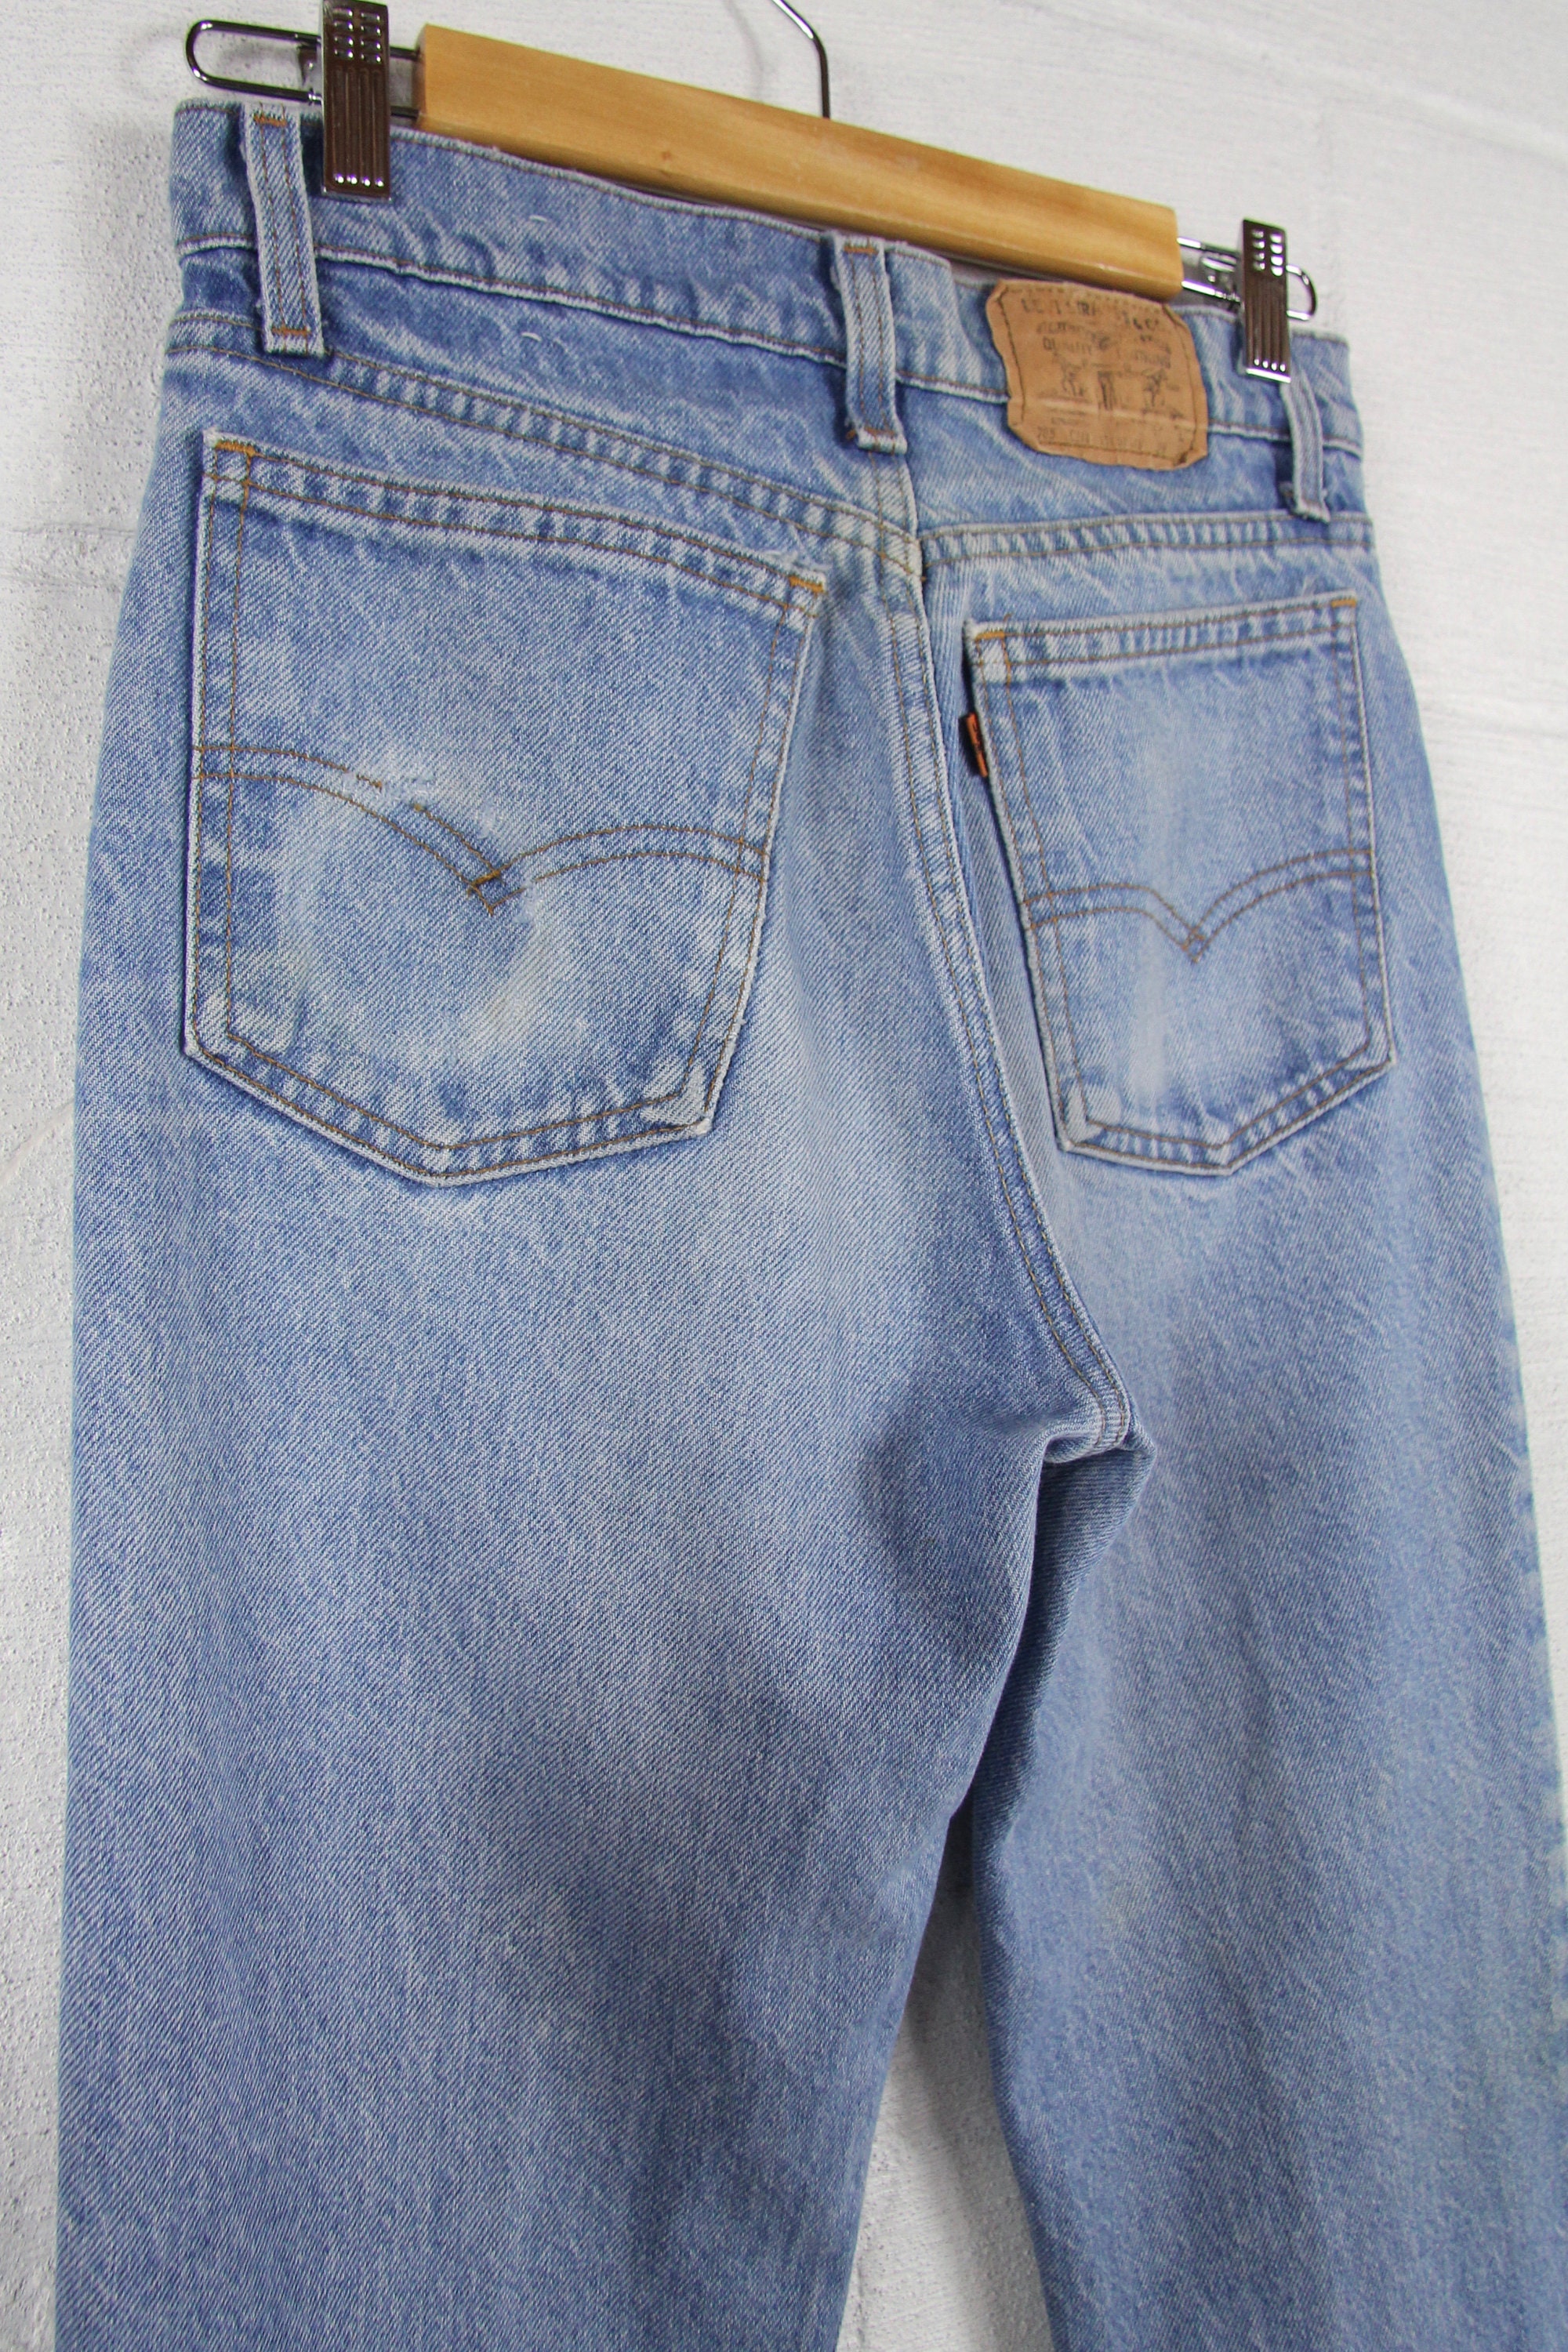 Orange Tab Levis 705 Vintage Jeans Light Wash Tapered High Waisted ...